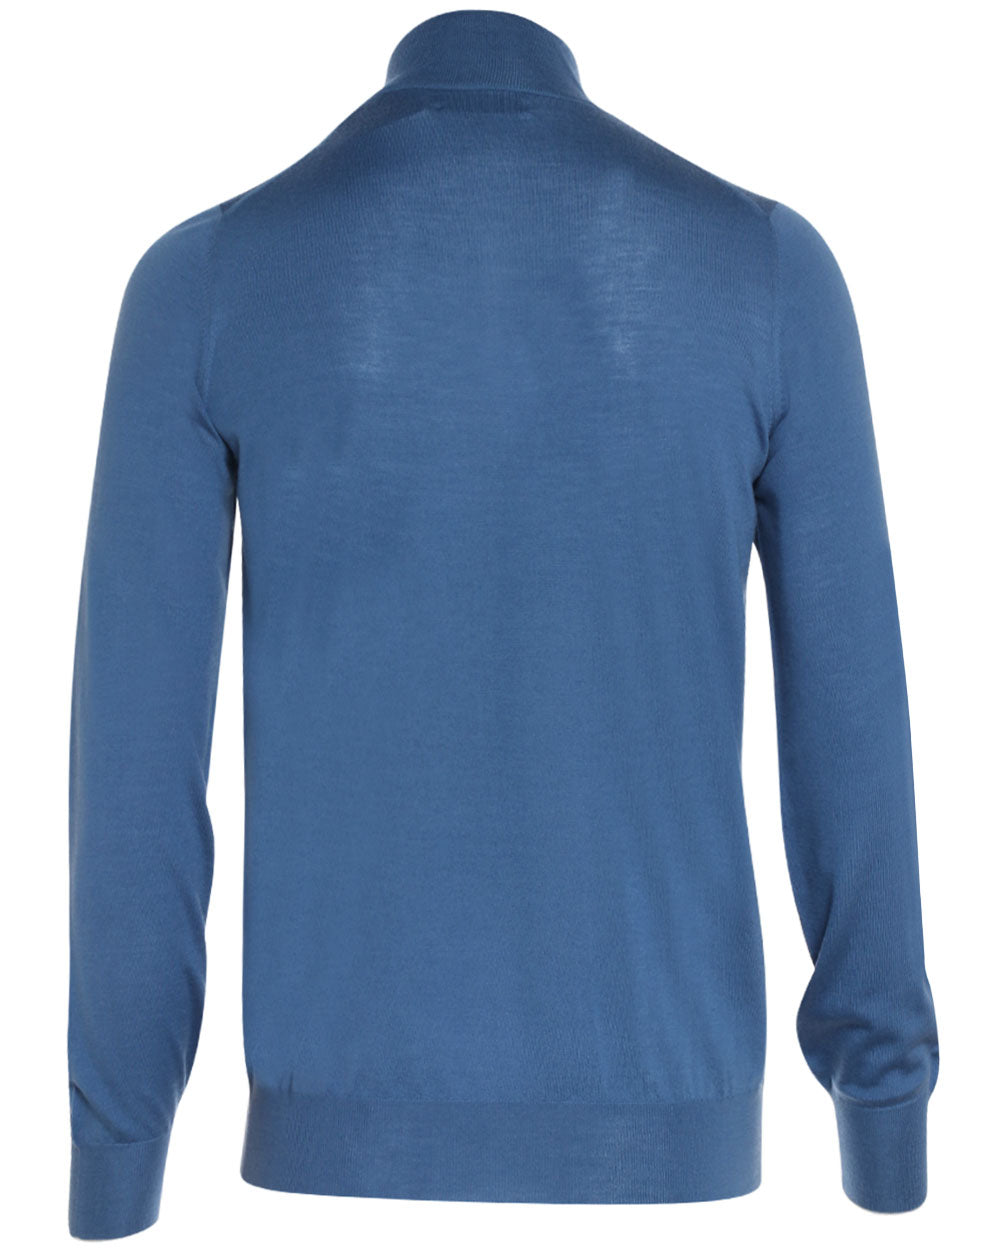 Blueberry Fine Gauge Quarter Zip Sweater